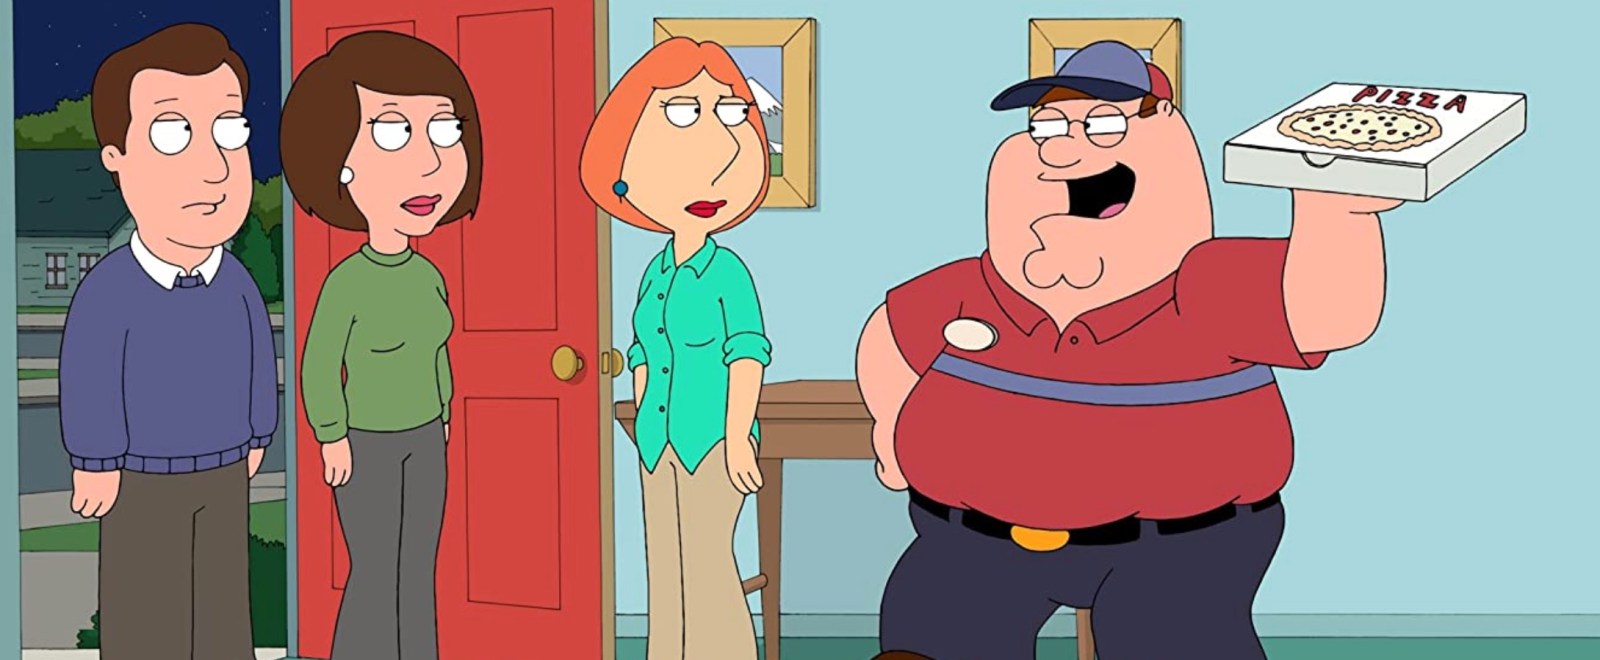 Family Guy The Book of Joe (TV Episode 2014) - IMDb